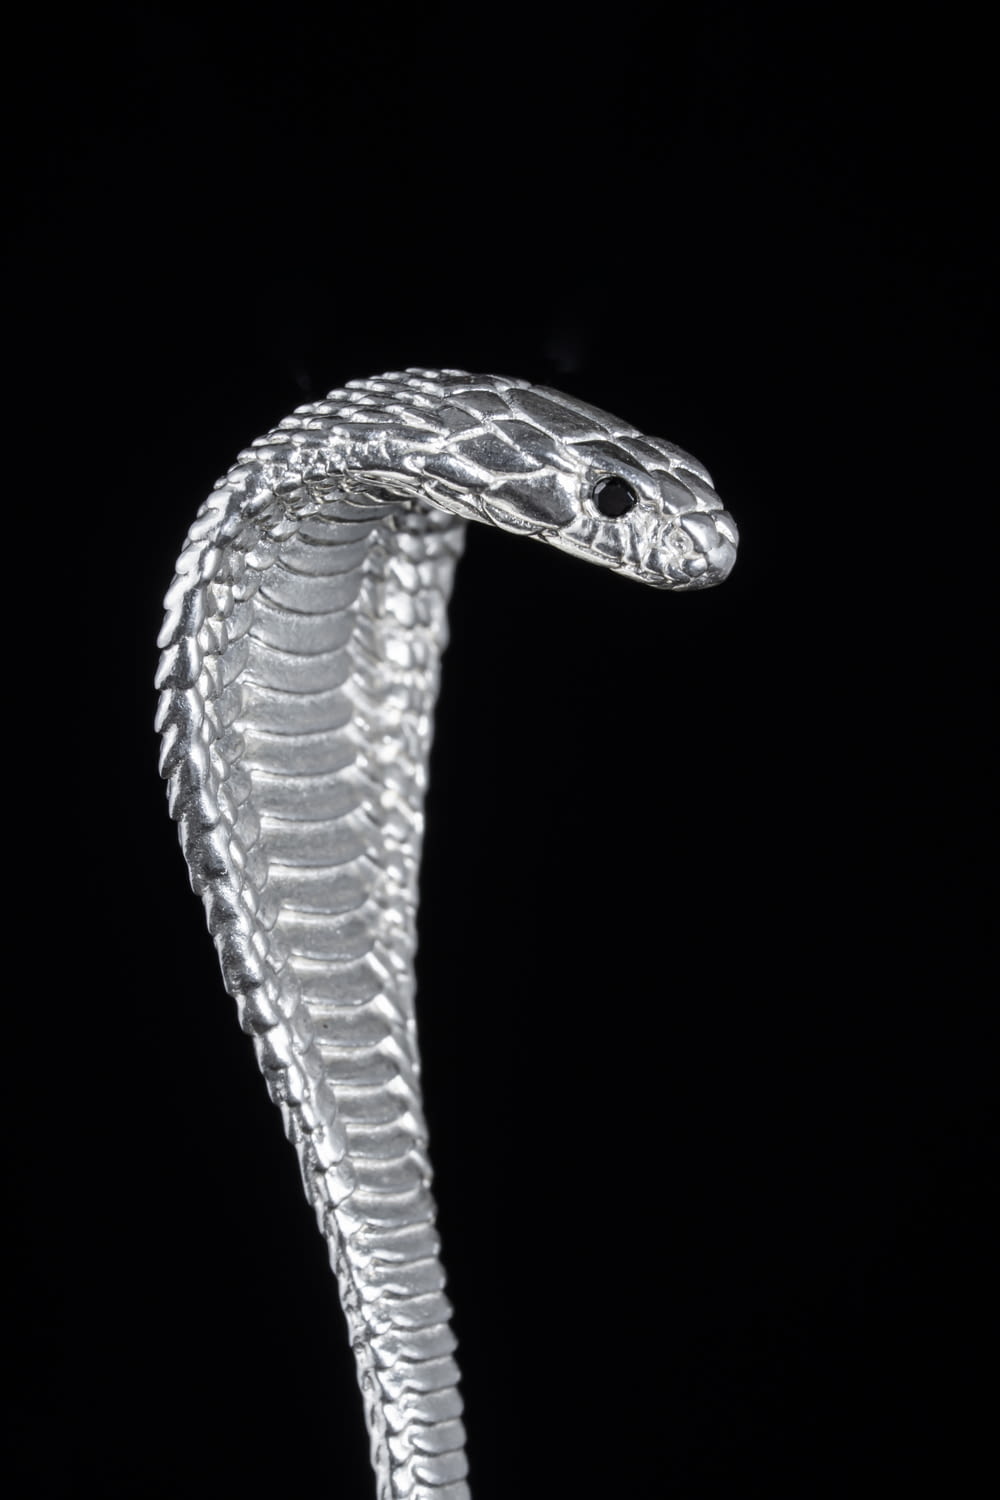 a white snake on a black background